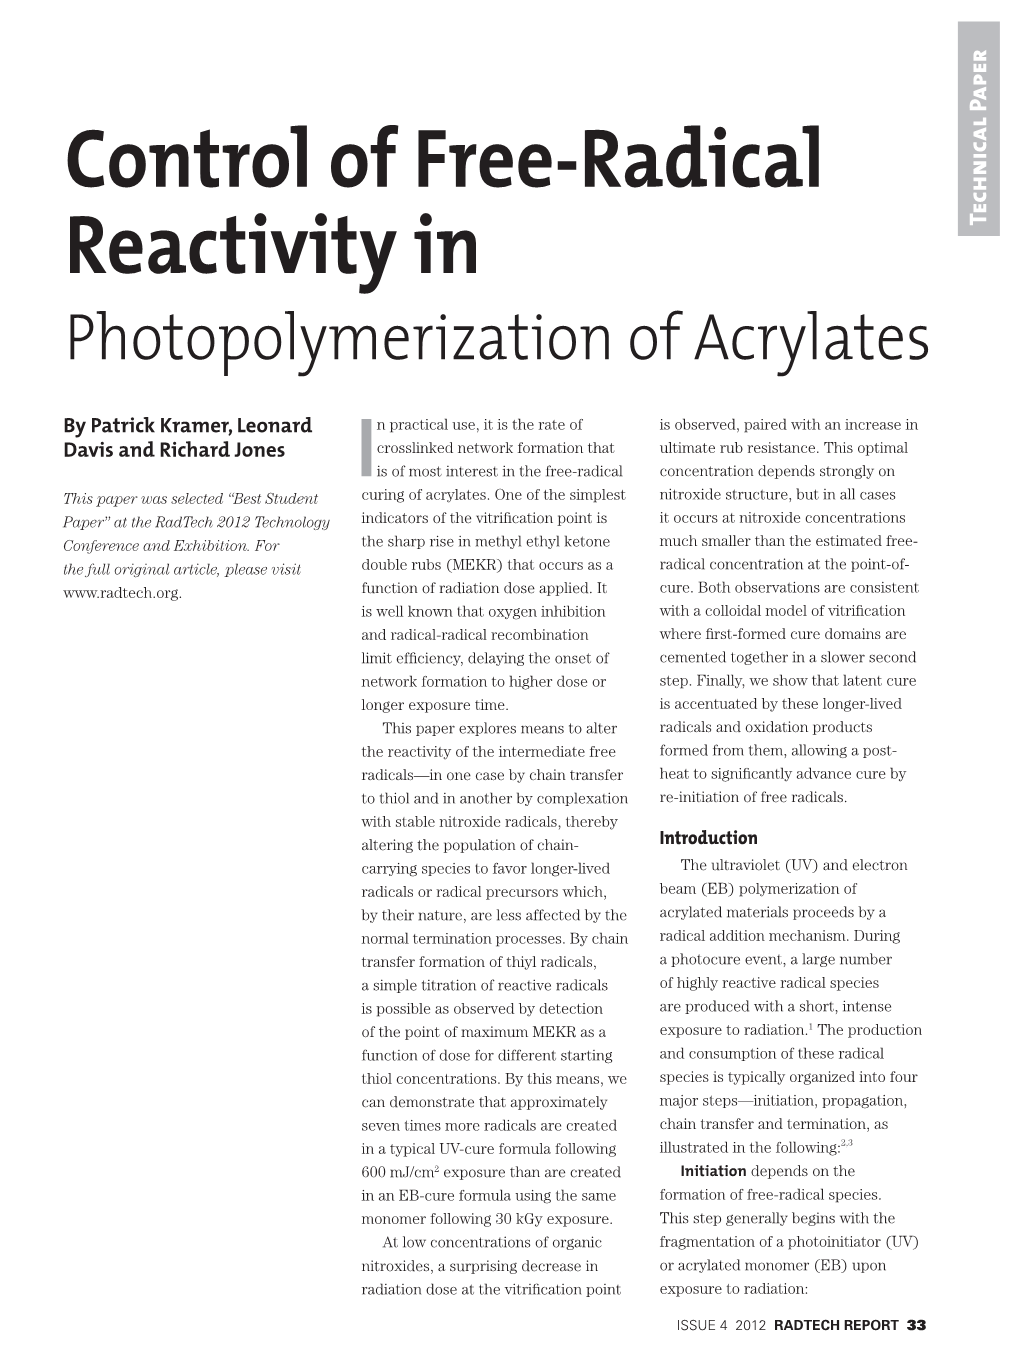 Control of Free-Radical Reactivity in Photopolymerization of Acrylates